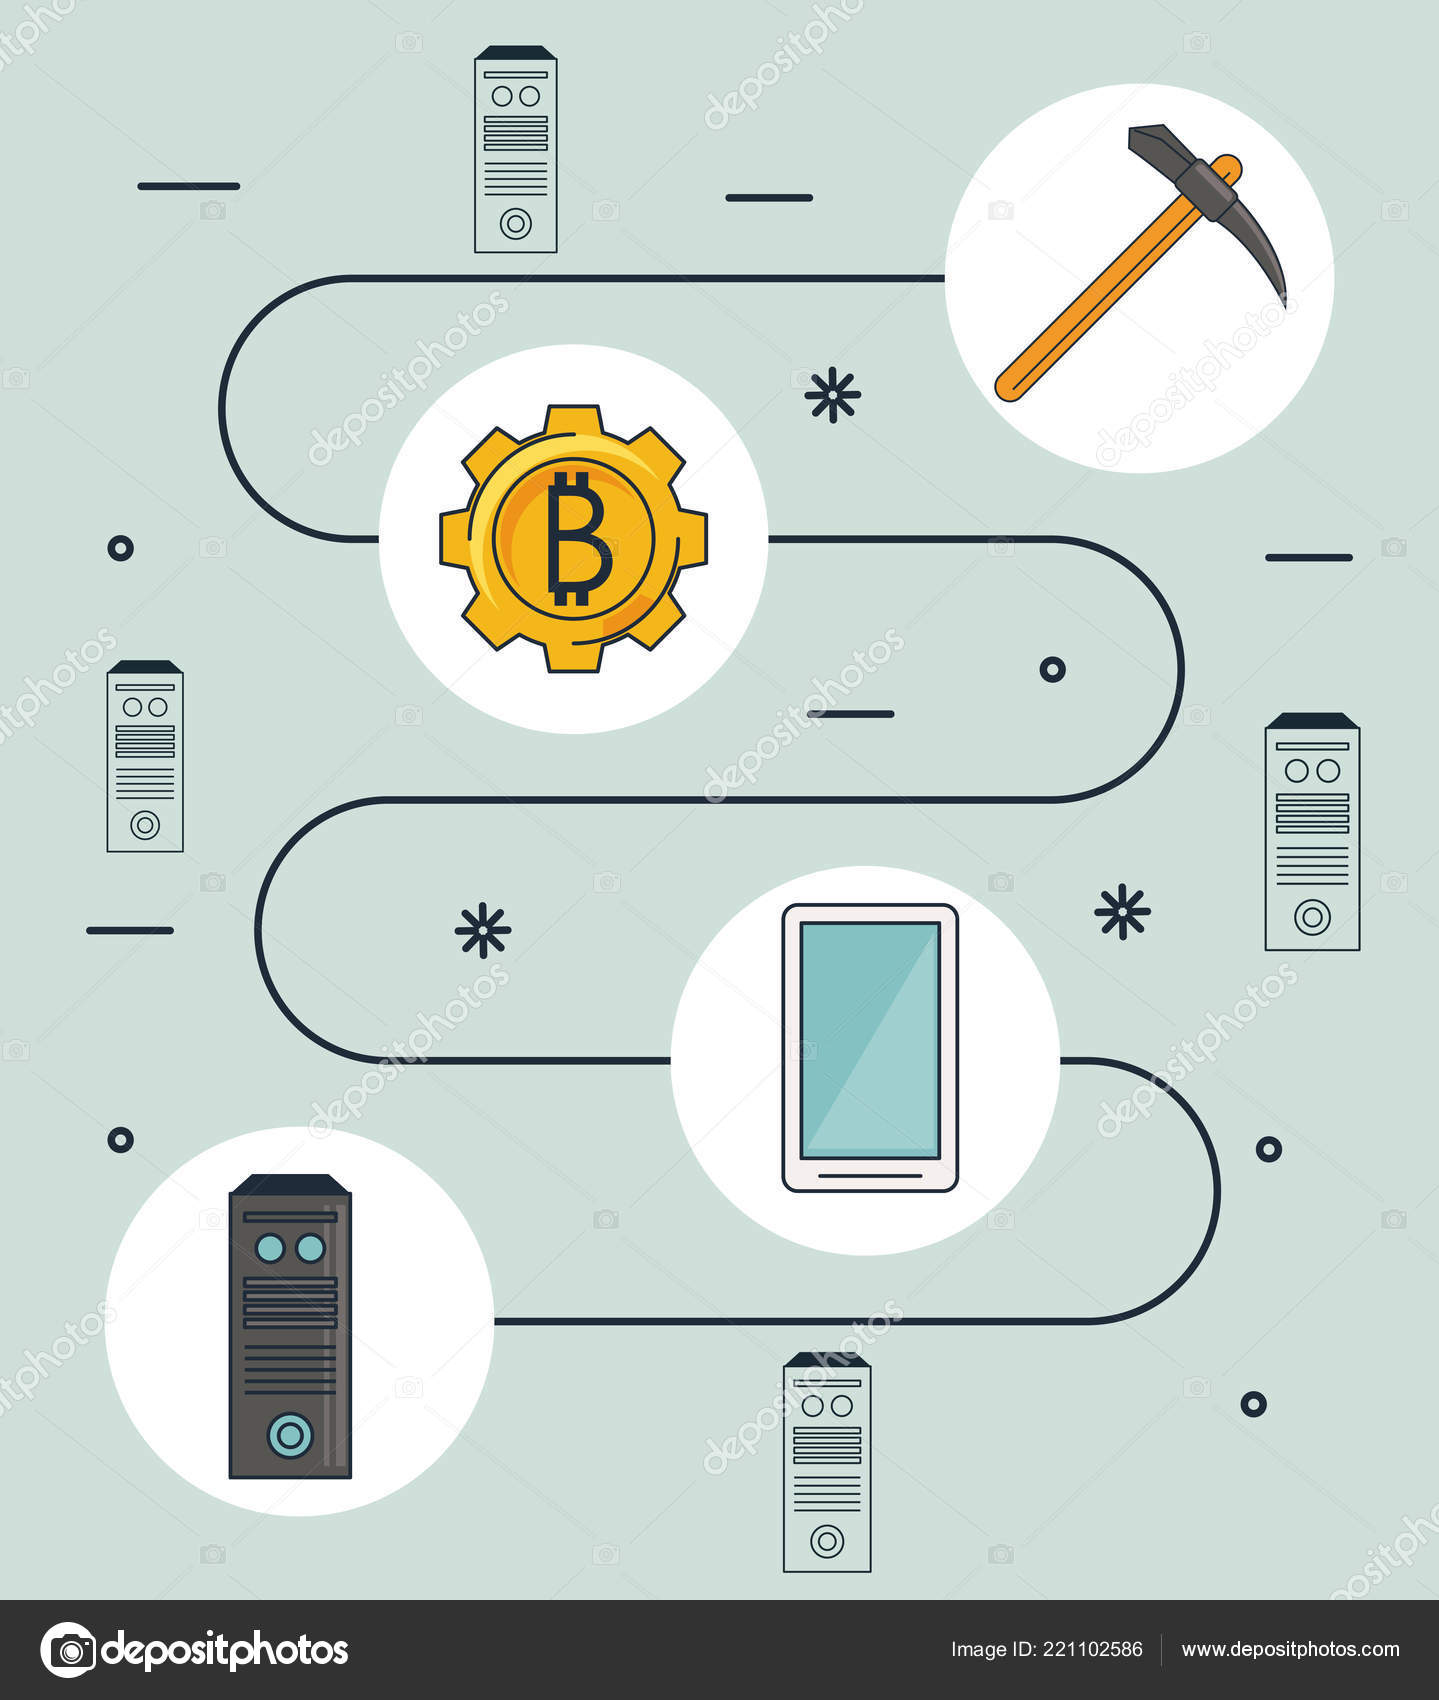 Bitcoin mining tools